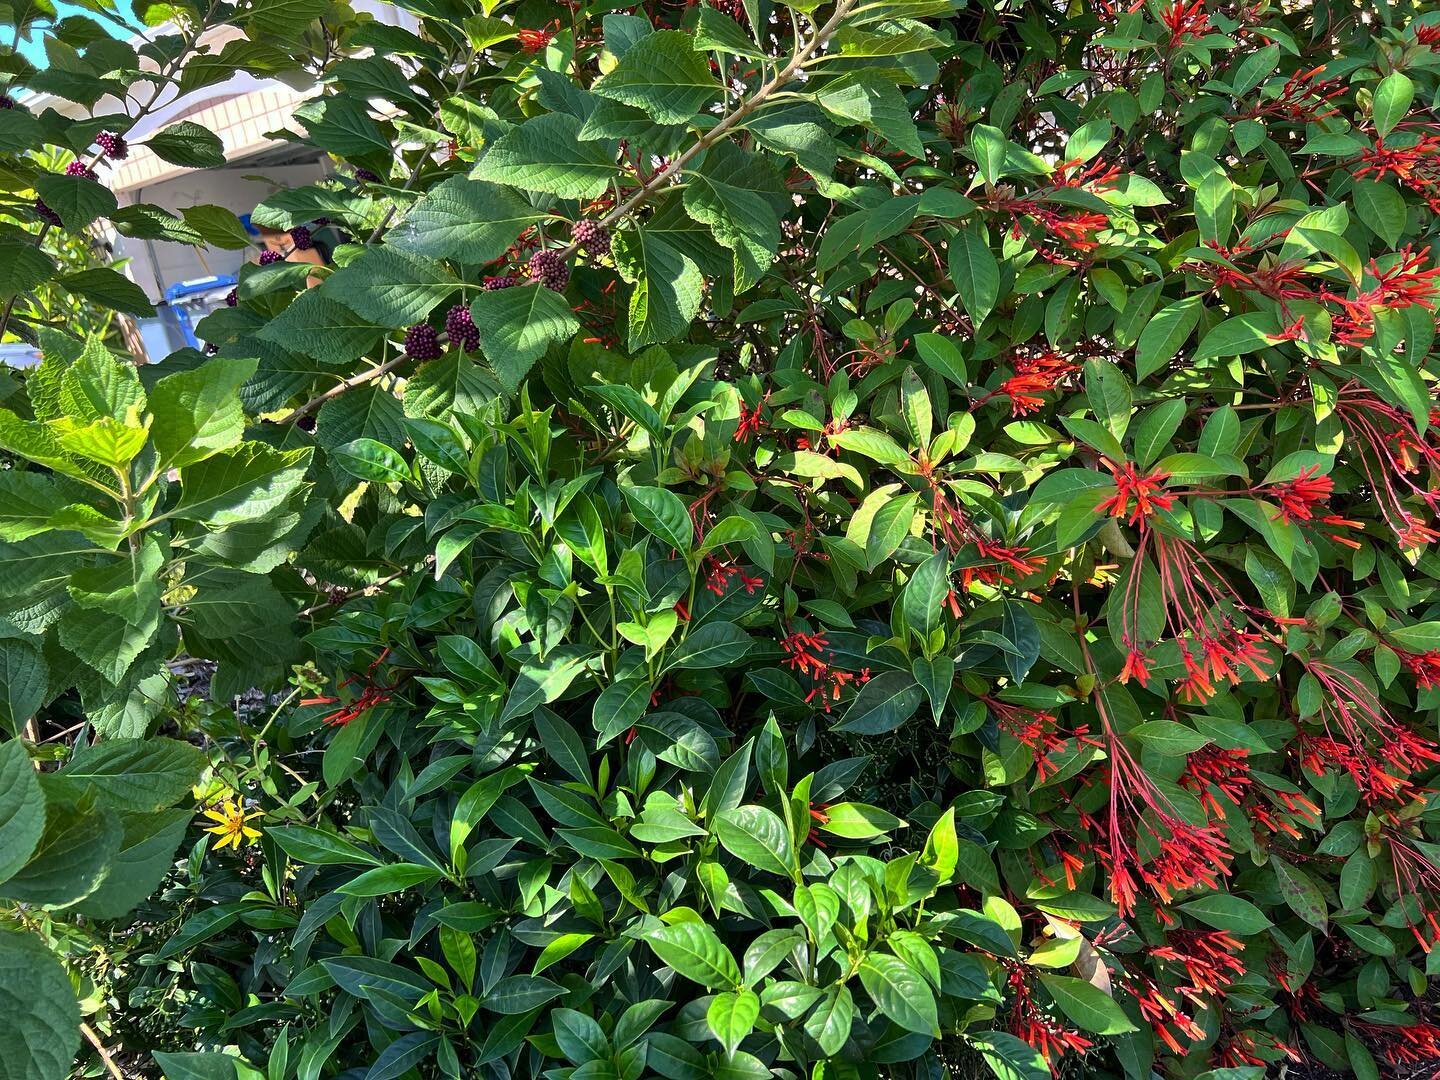 Can you name the three native shrubs in this picture? #gardenwithnativeplants #wildlifegarden #rewild #gardenforbirds #hummingbirdgarden #berriesforbirds #naturalgardening #sarasotagardening